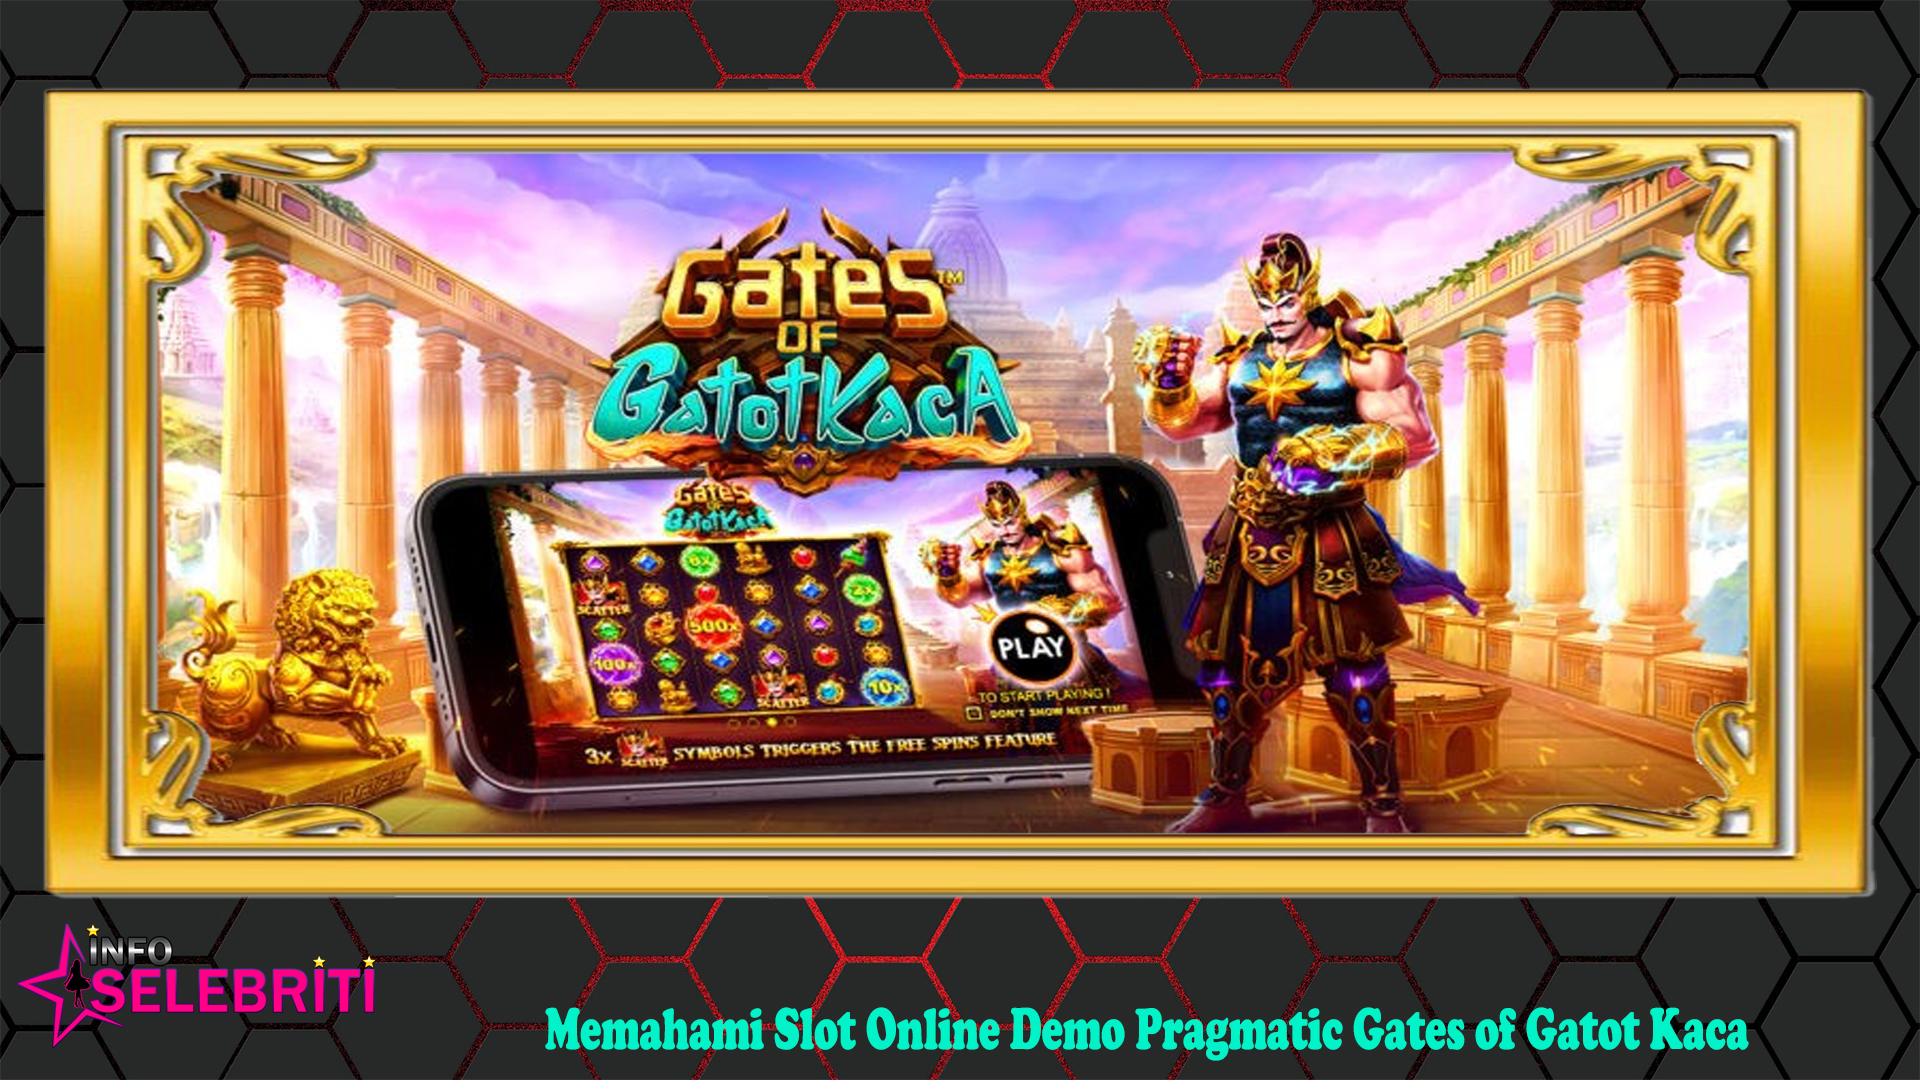 Memahami Slot Online Demo Pragmatic Gates of Gatot Kaca